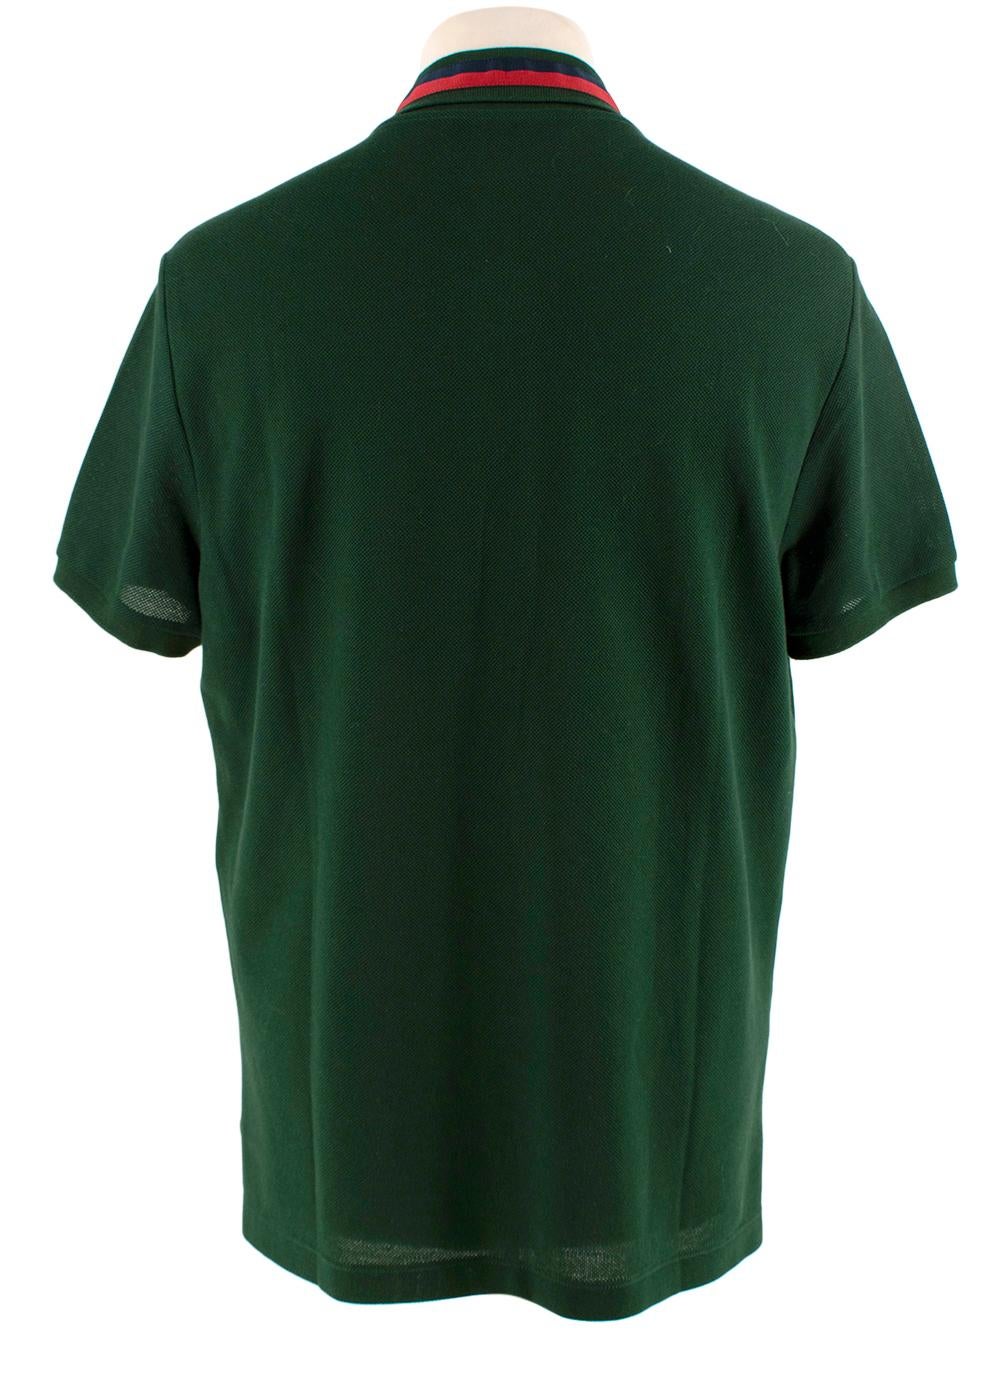 green london polo shirt